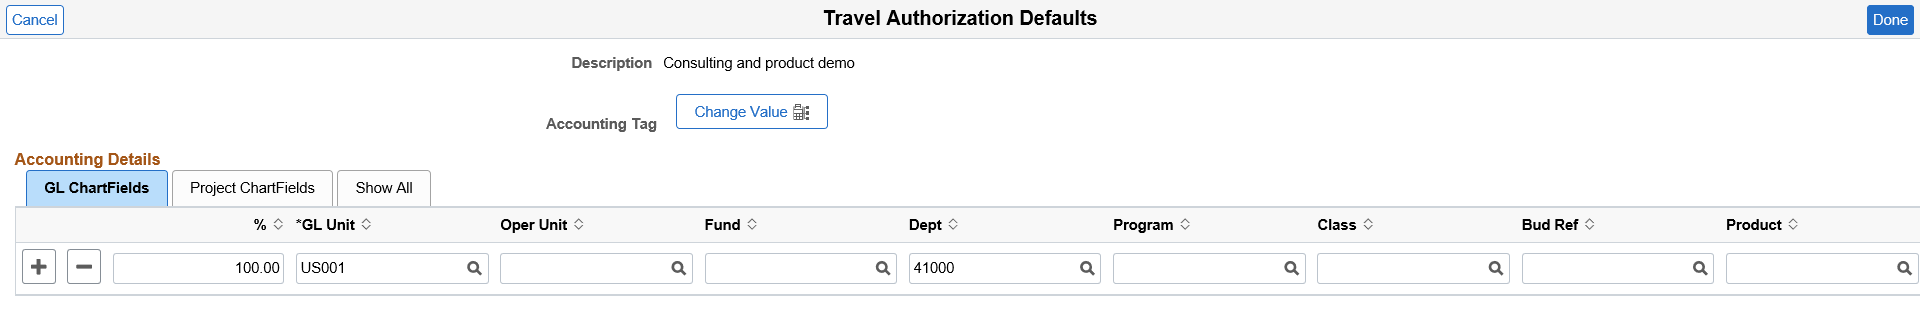 Travel Authorization Defaults